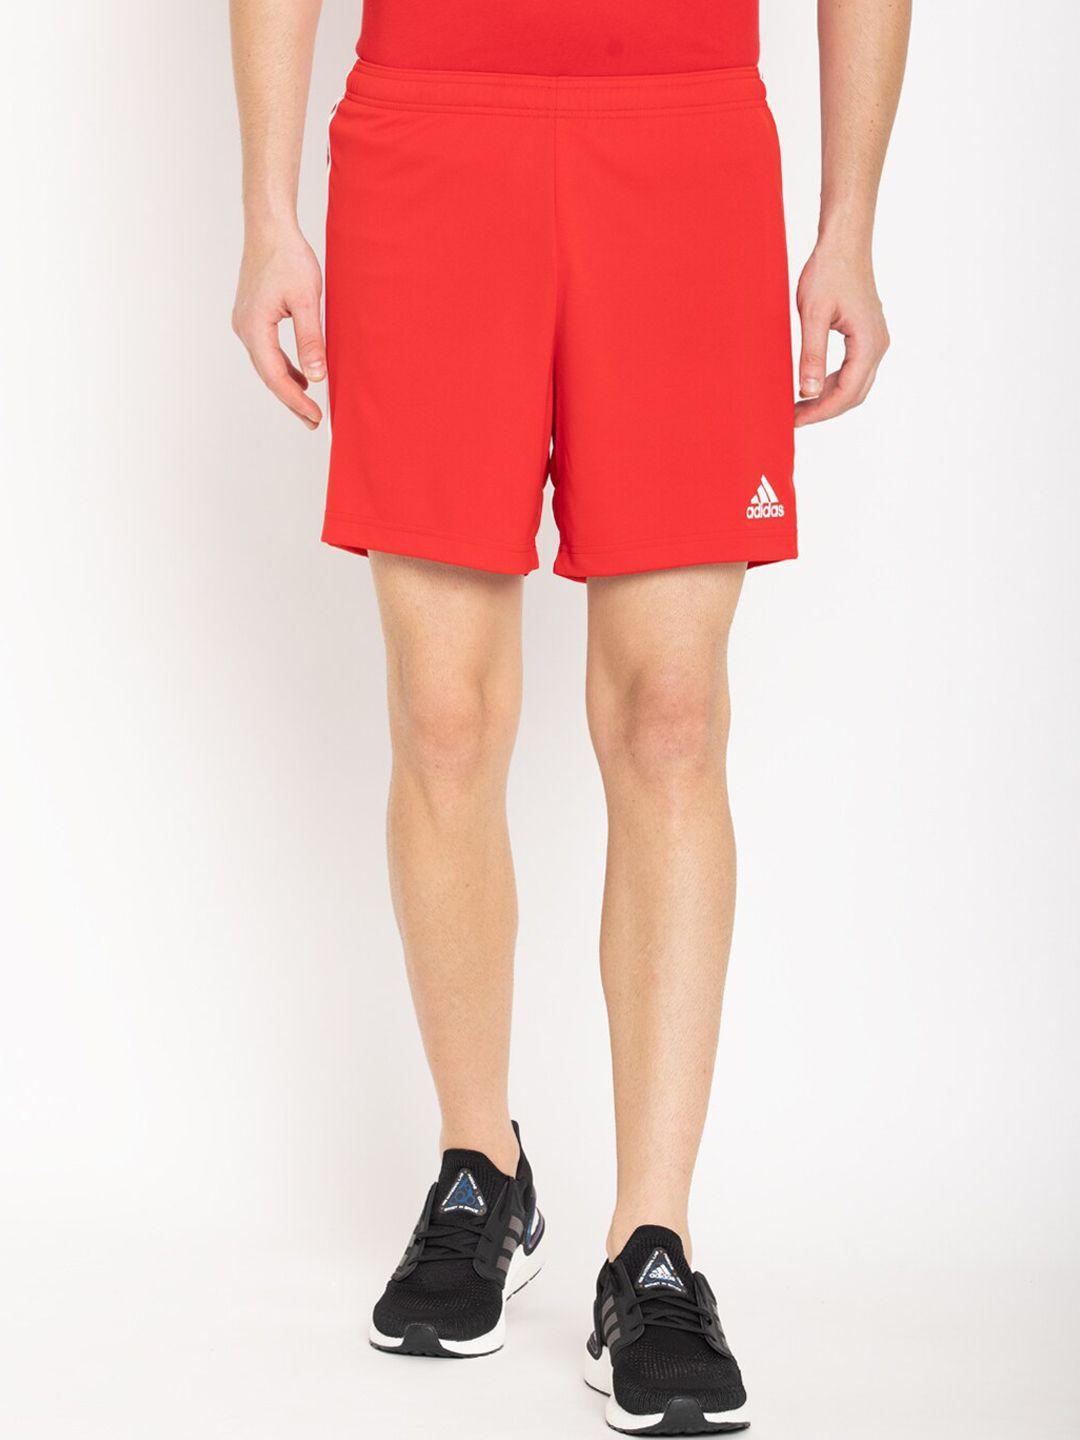 adidas men red sports shorts